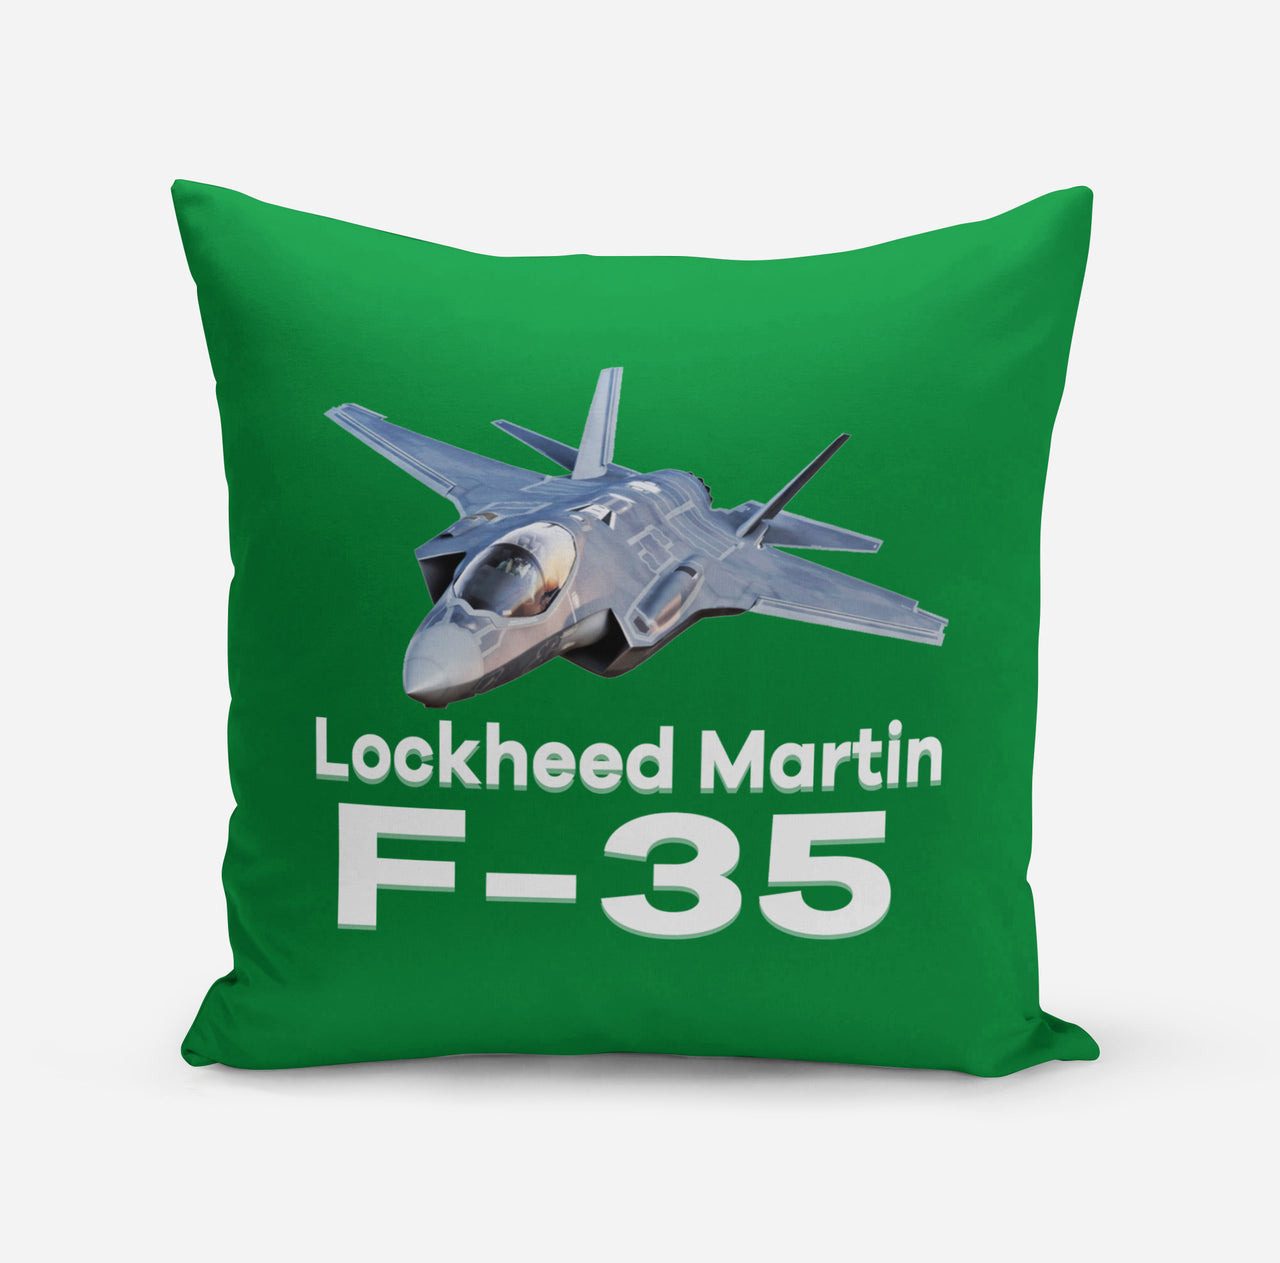 The Lockheed Martin F35 Designed Pillows